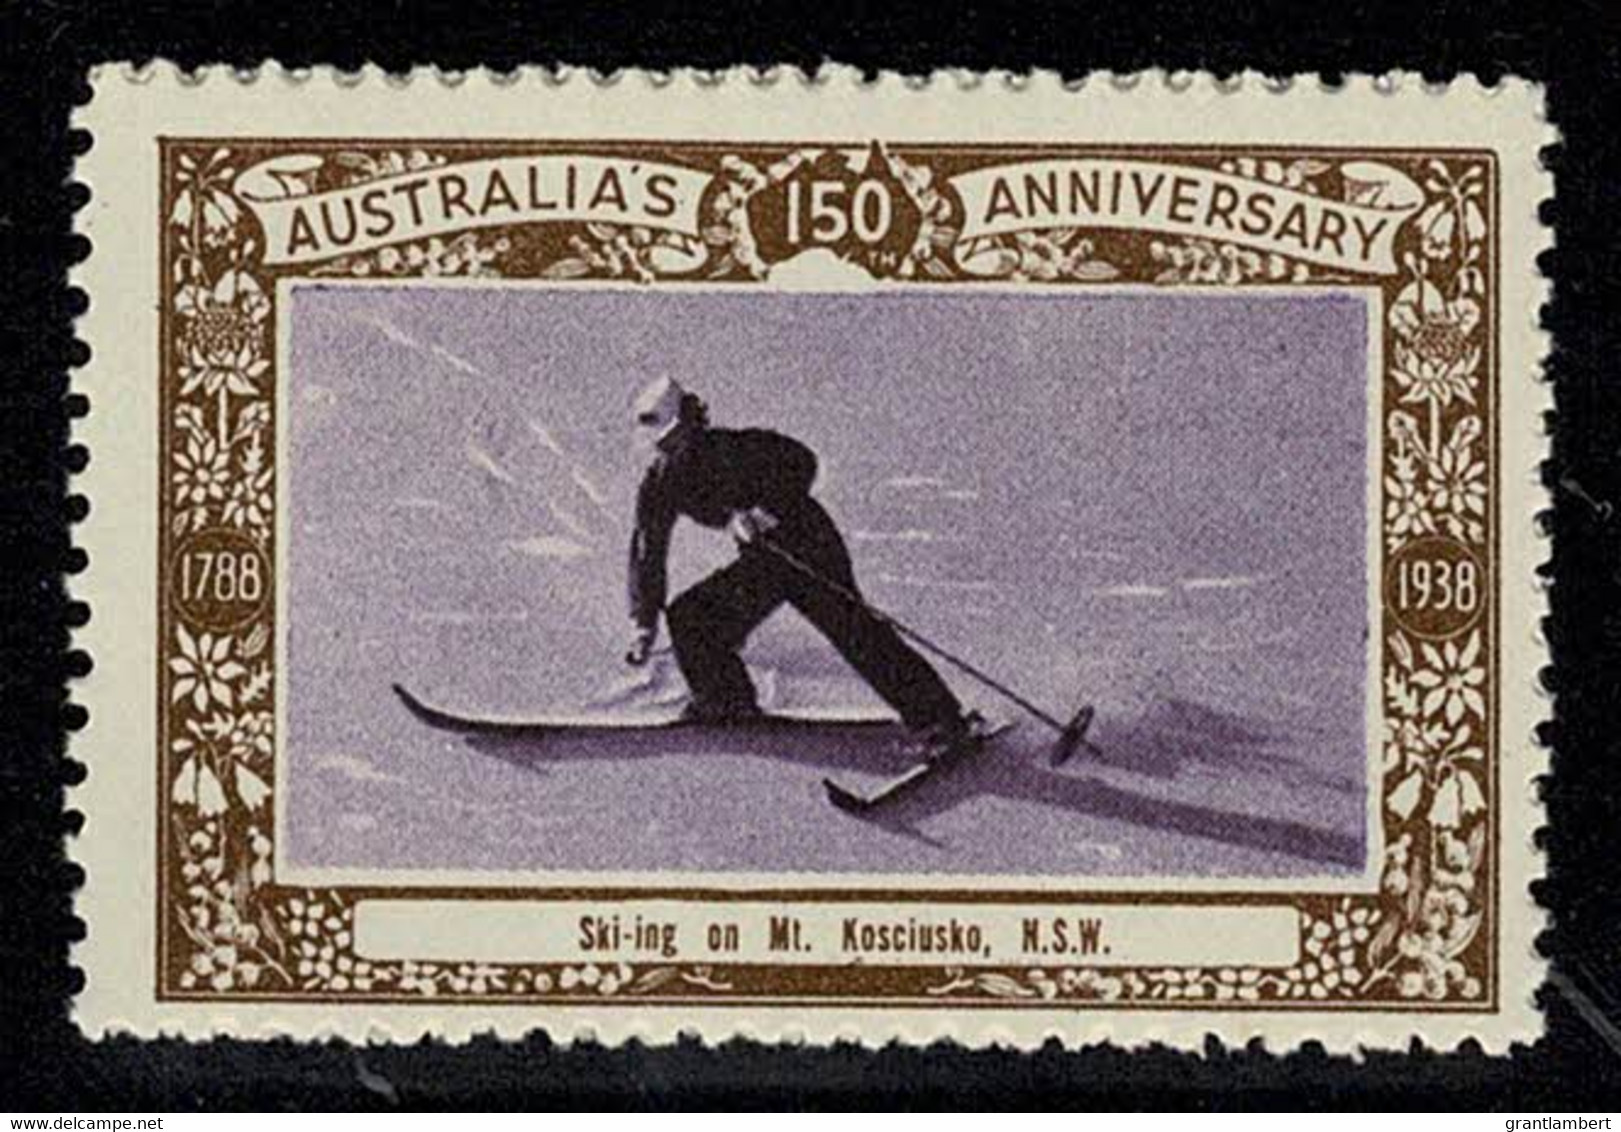 Australia 1938 Ski-ing On Mt. Kosciusko - NSW 150th Anniversary Cinderella MNH - Cinderellas